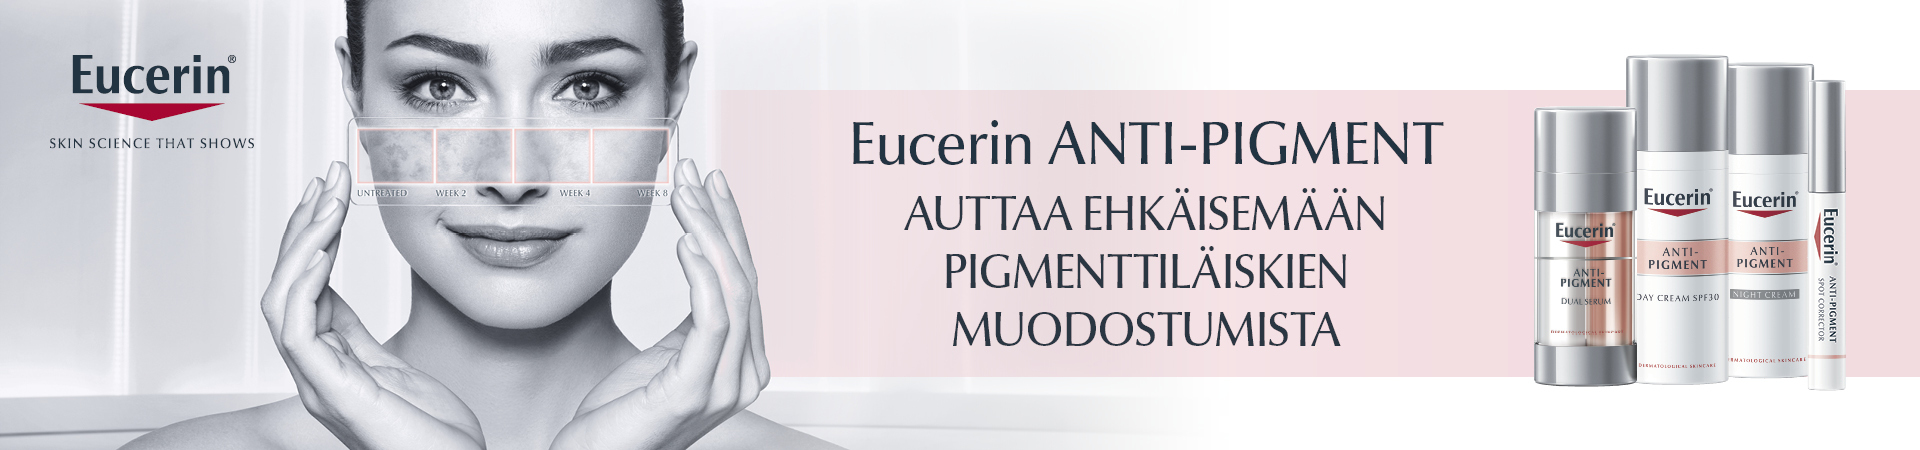 2020-10-eucerin-anti-pigment-dermatoclean-bannerit-1920x450px2